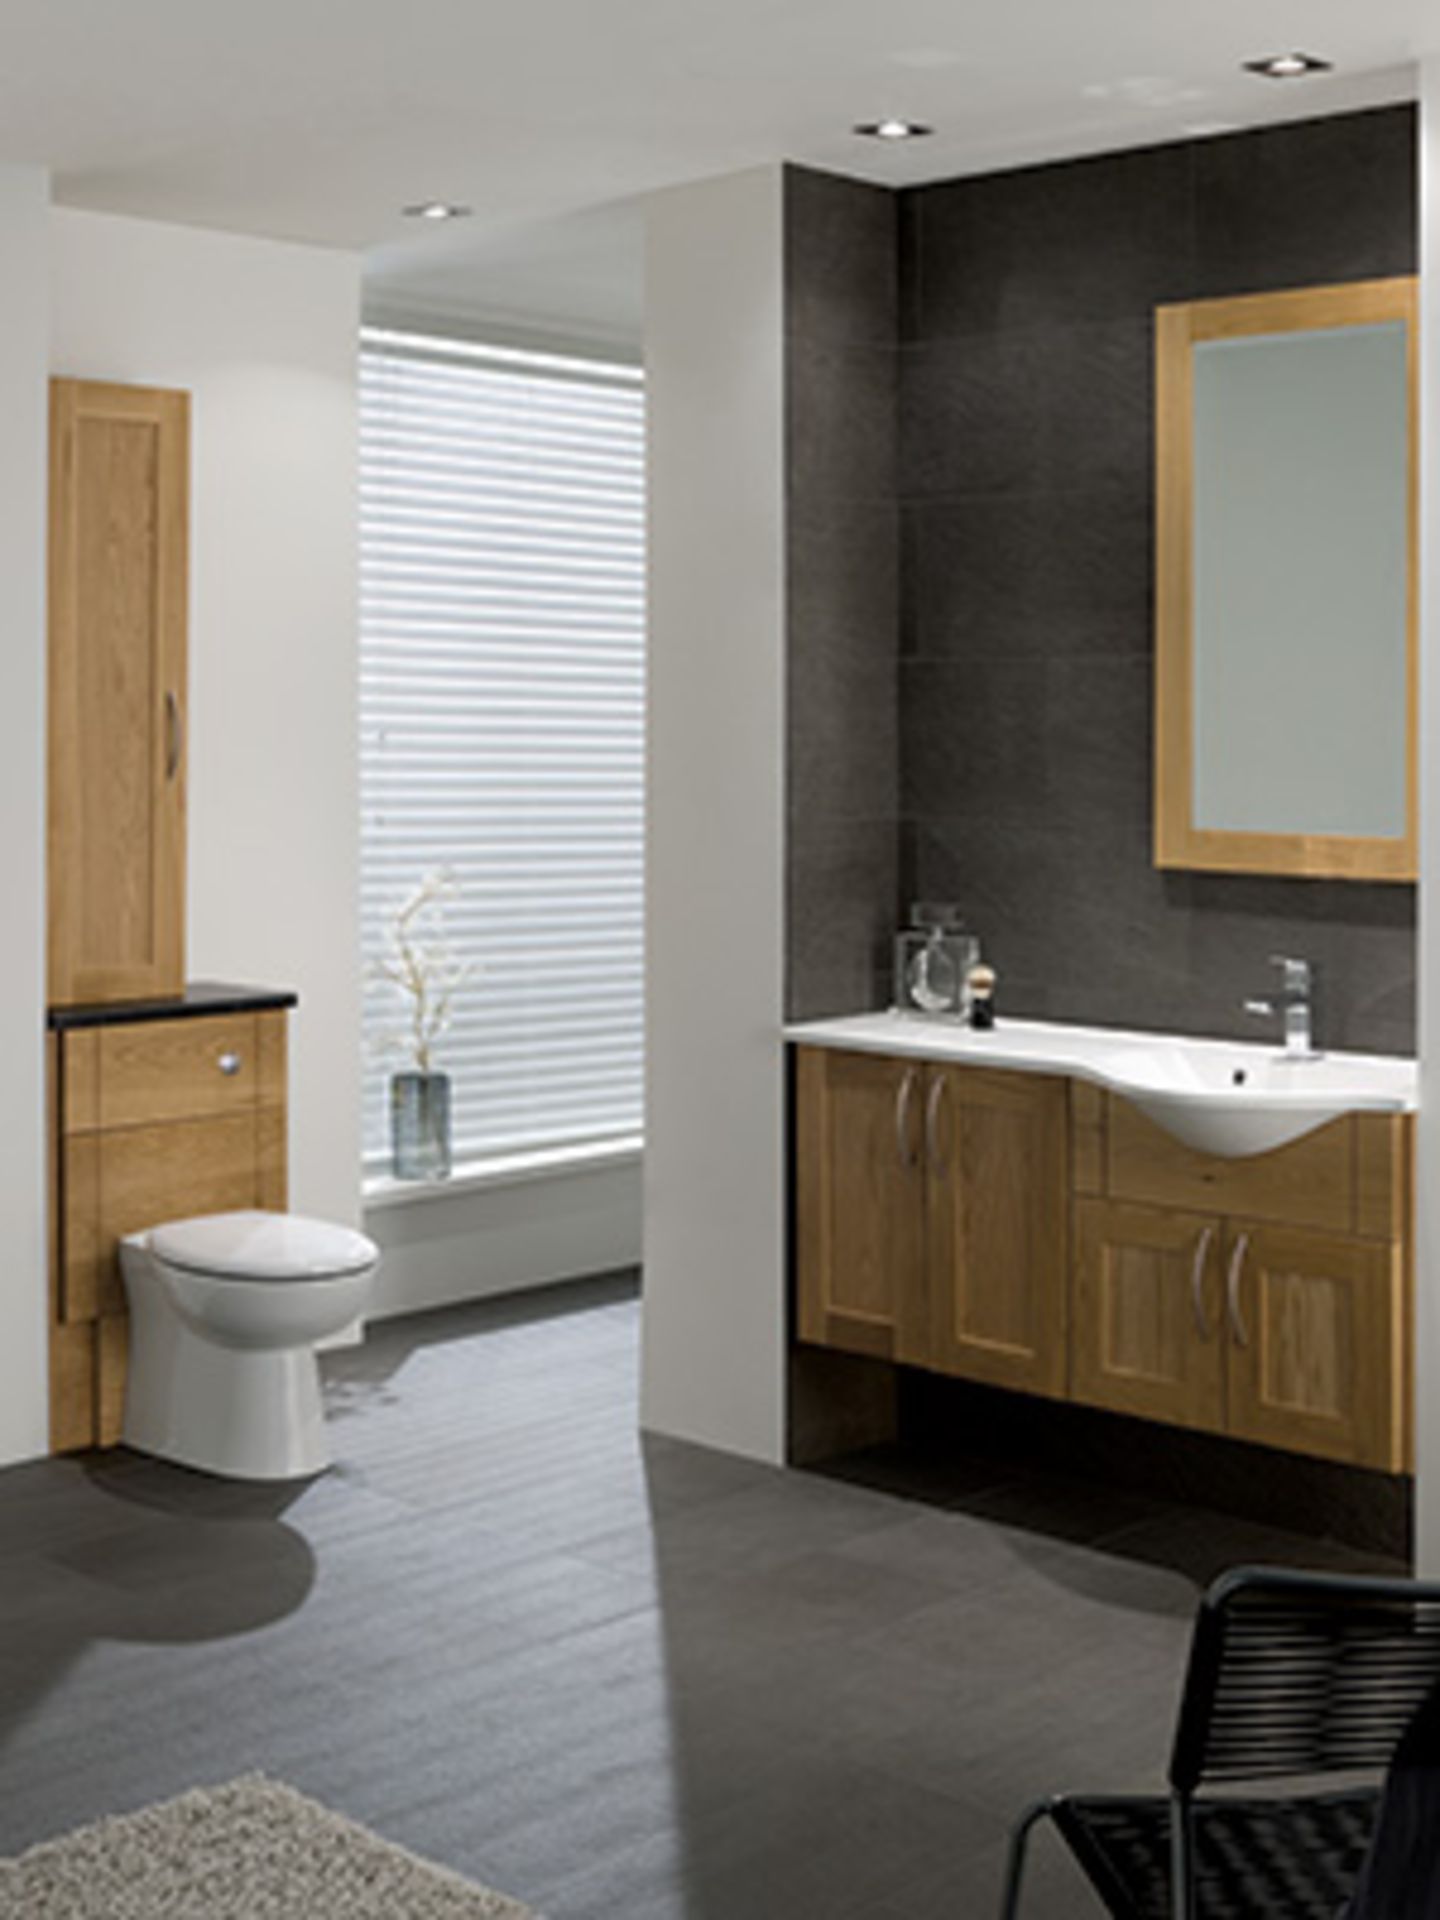 RRP - £ 969.40 Oak Vanity Units includes 600 base vanity unit slim line £204, toilet roll holder £13